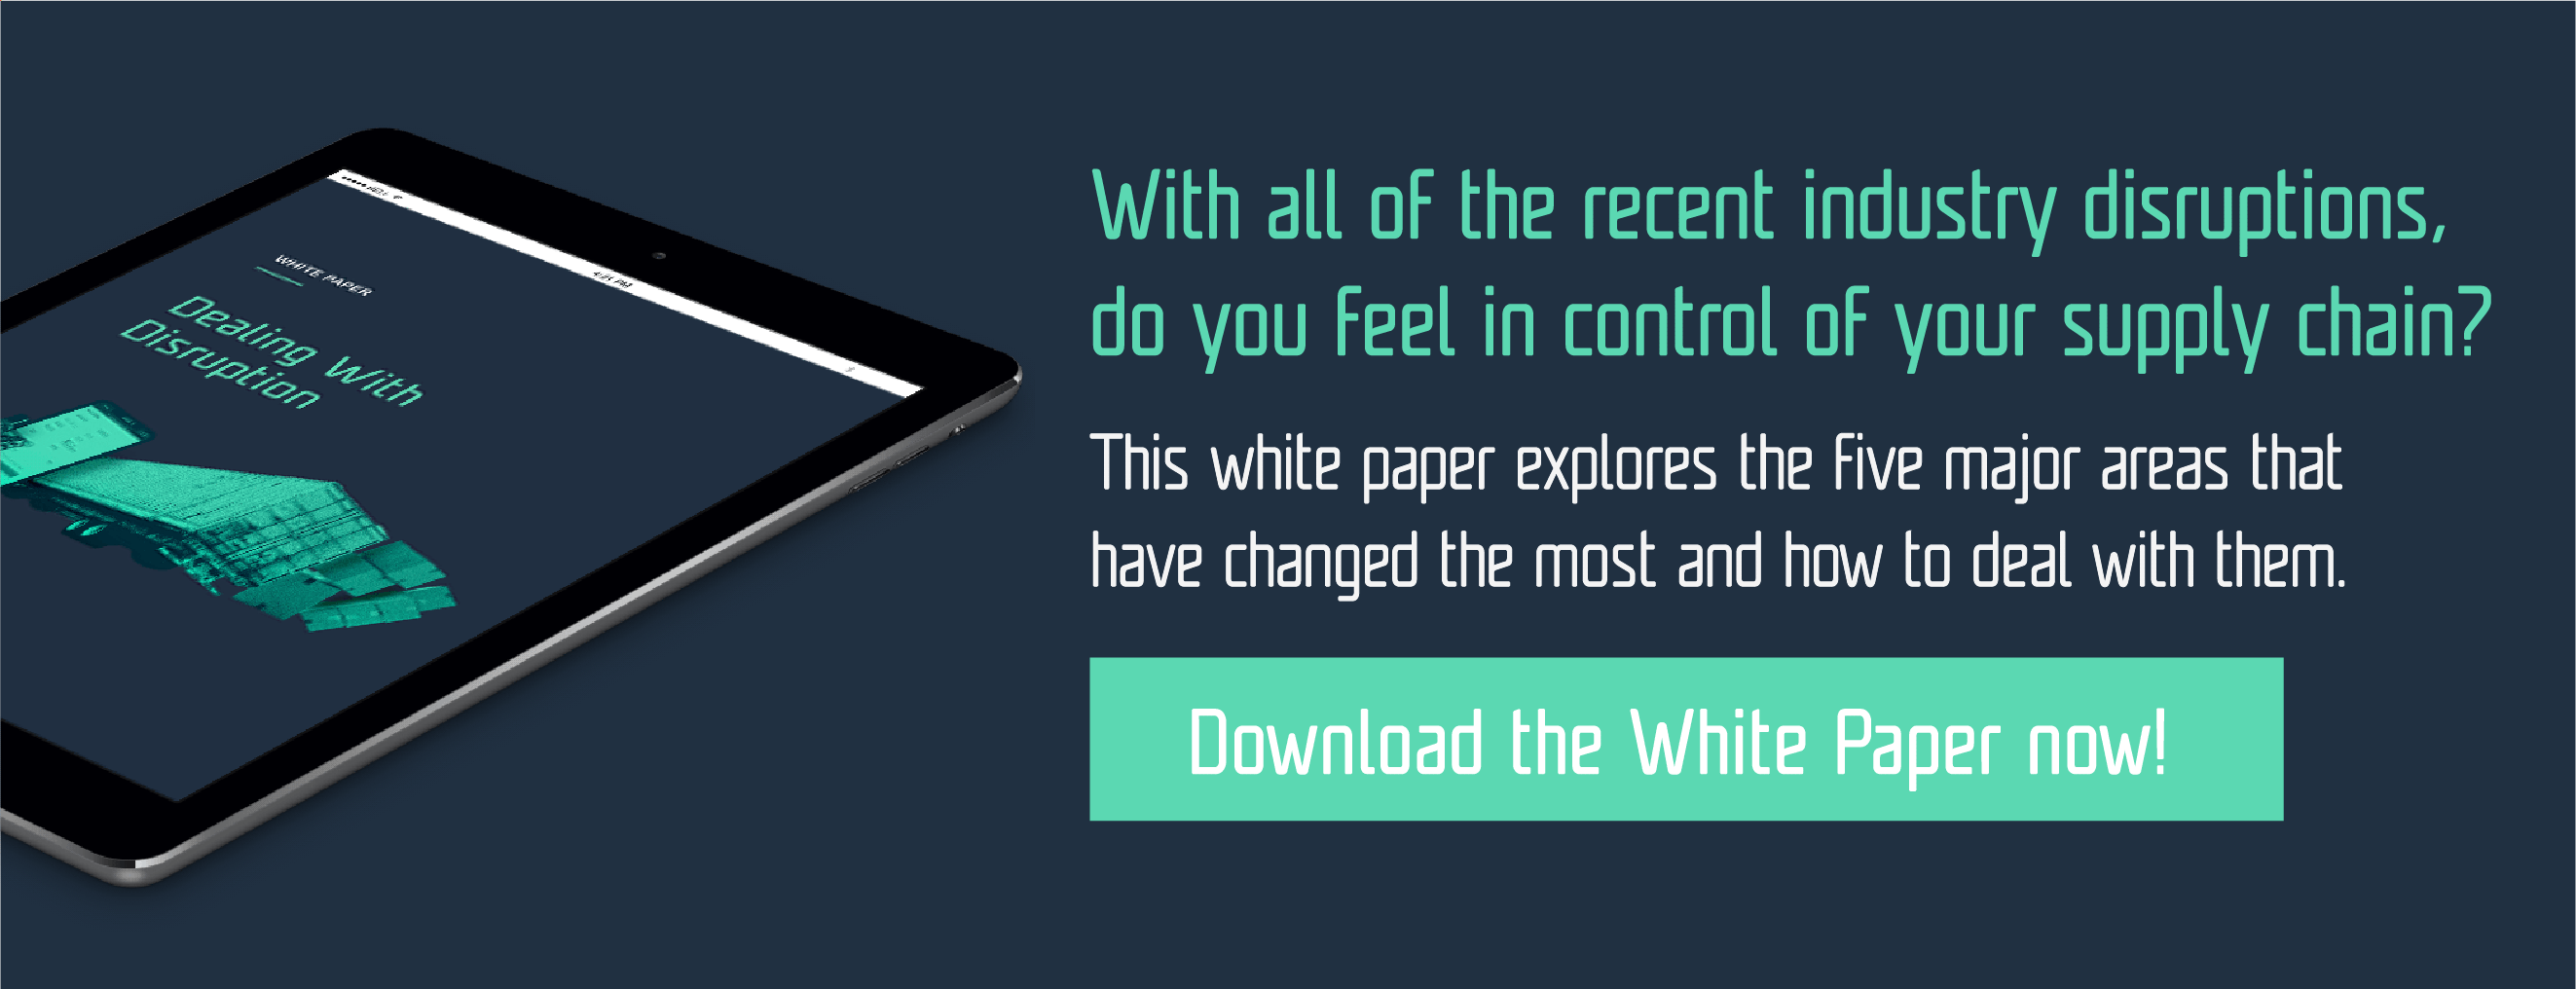 C3 - Disruption White Paper